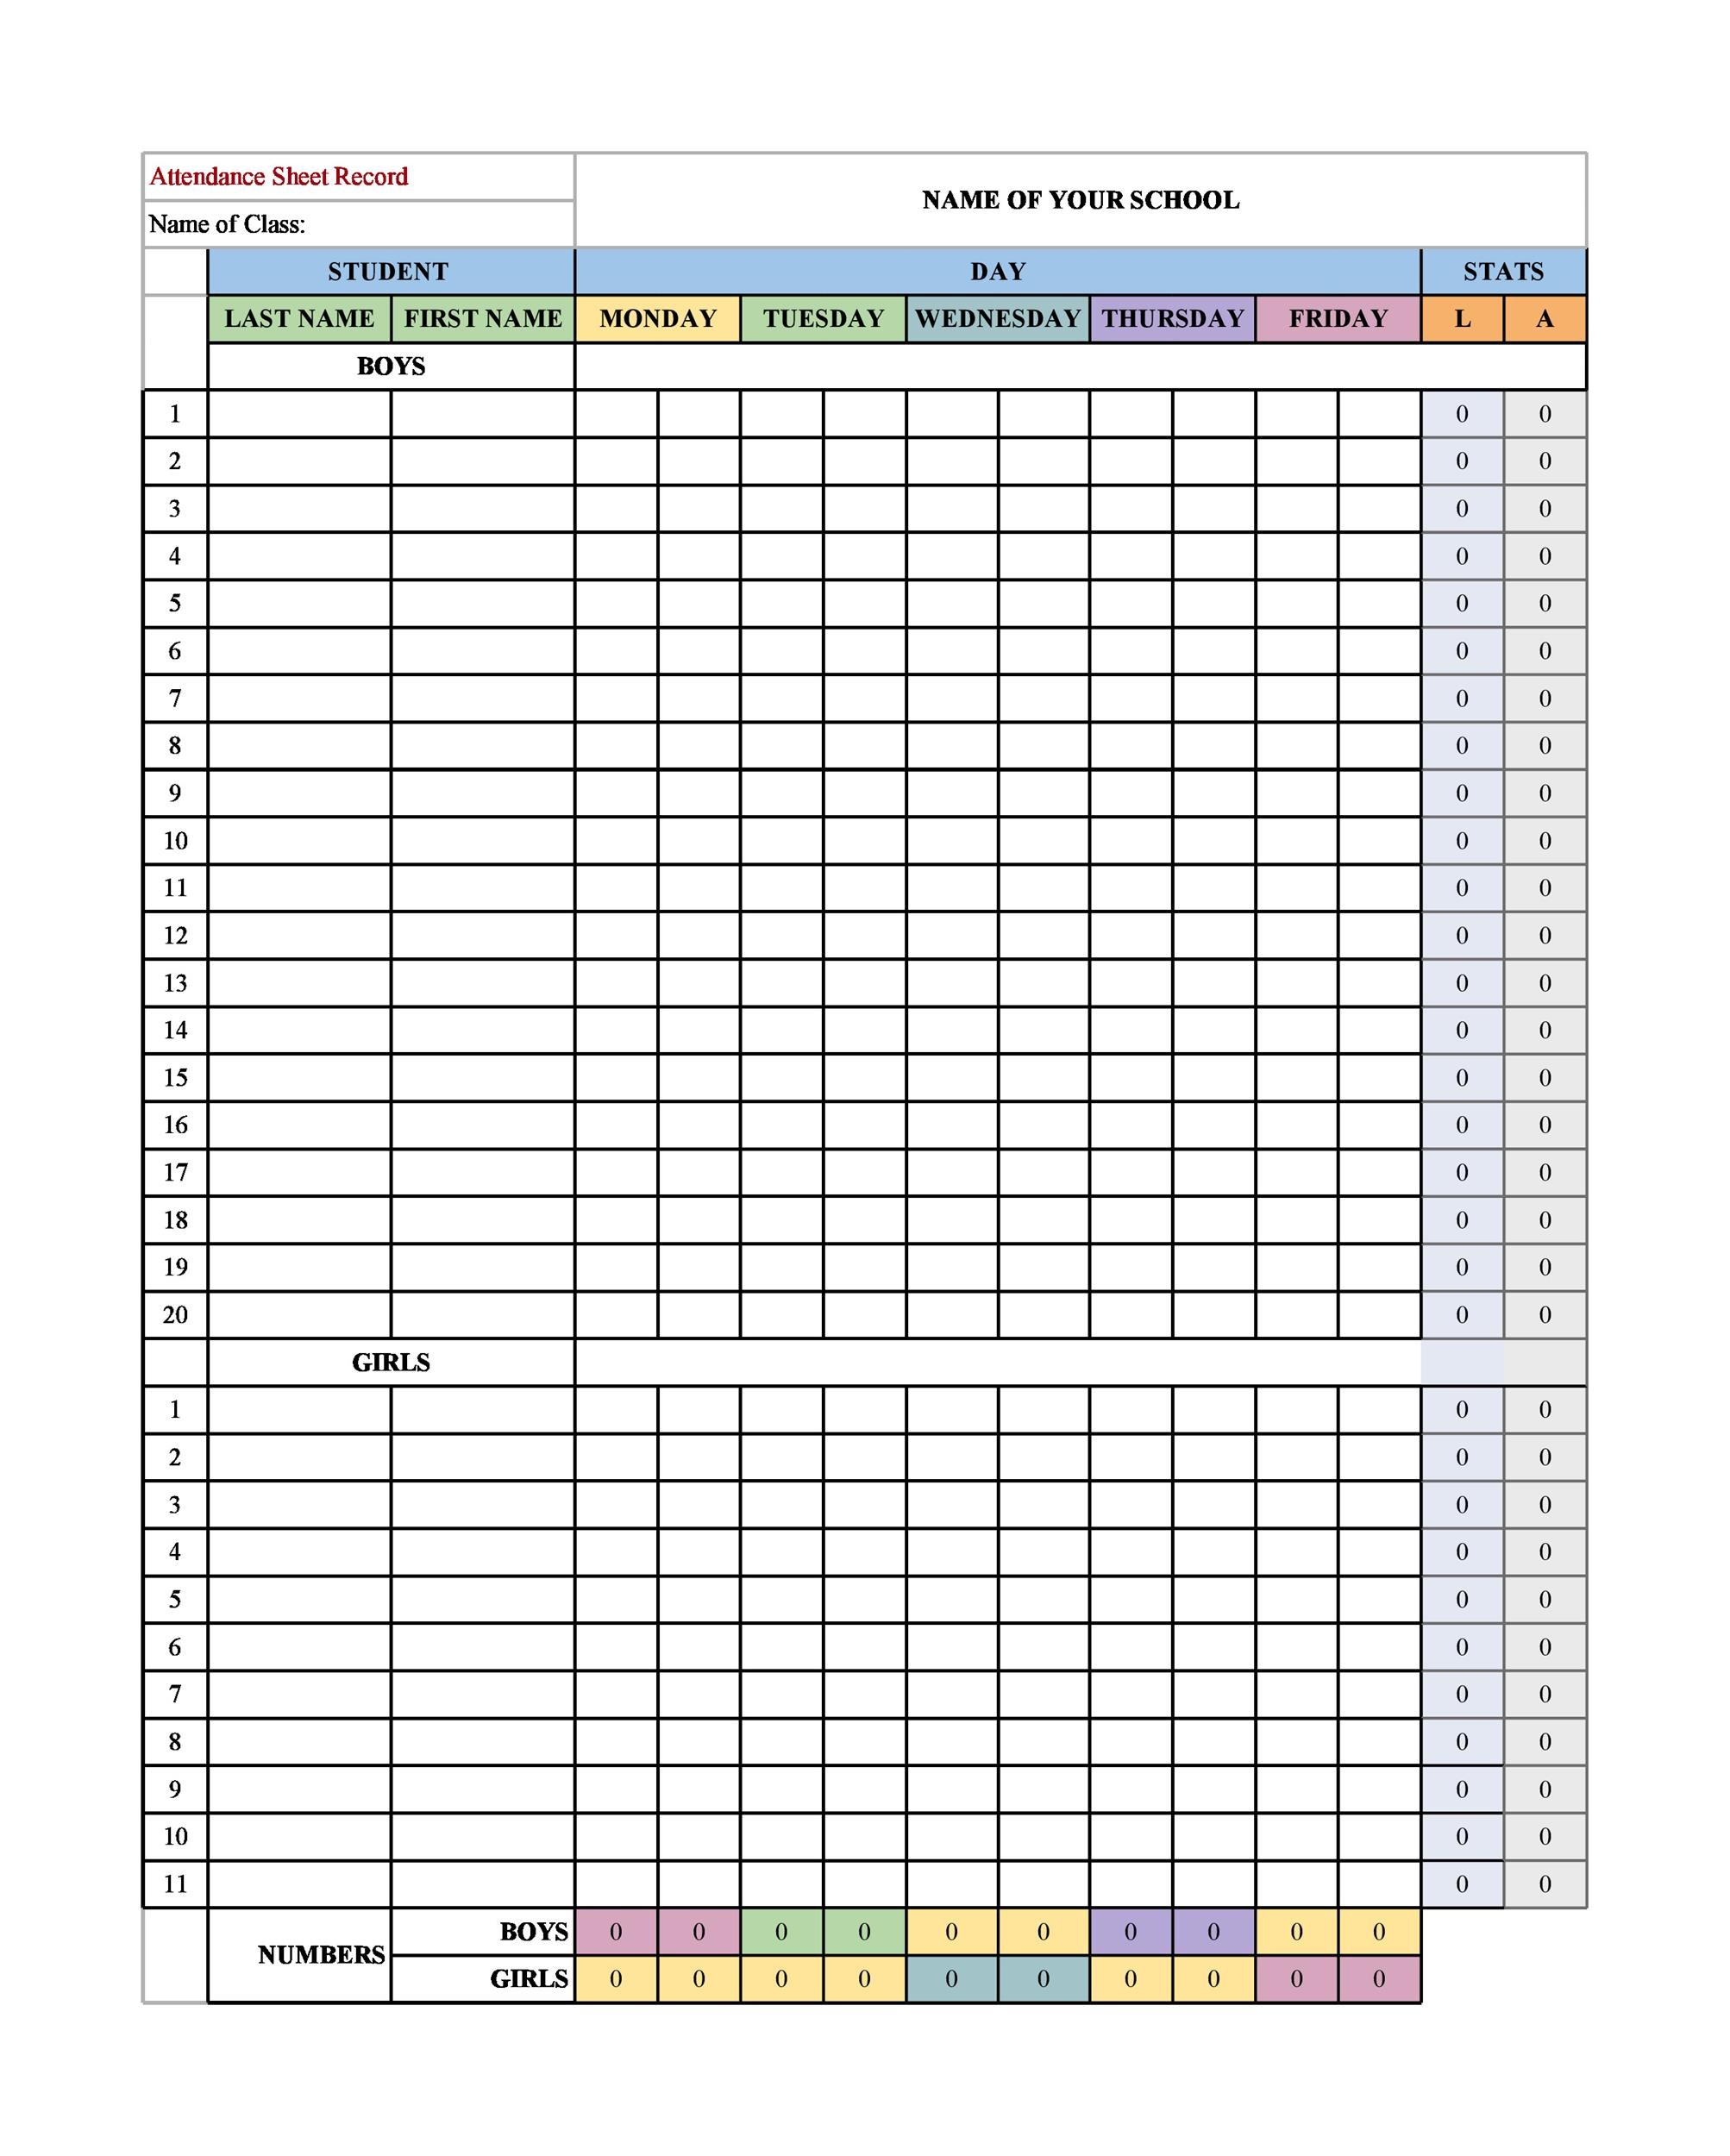 attendance sheet download pdf